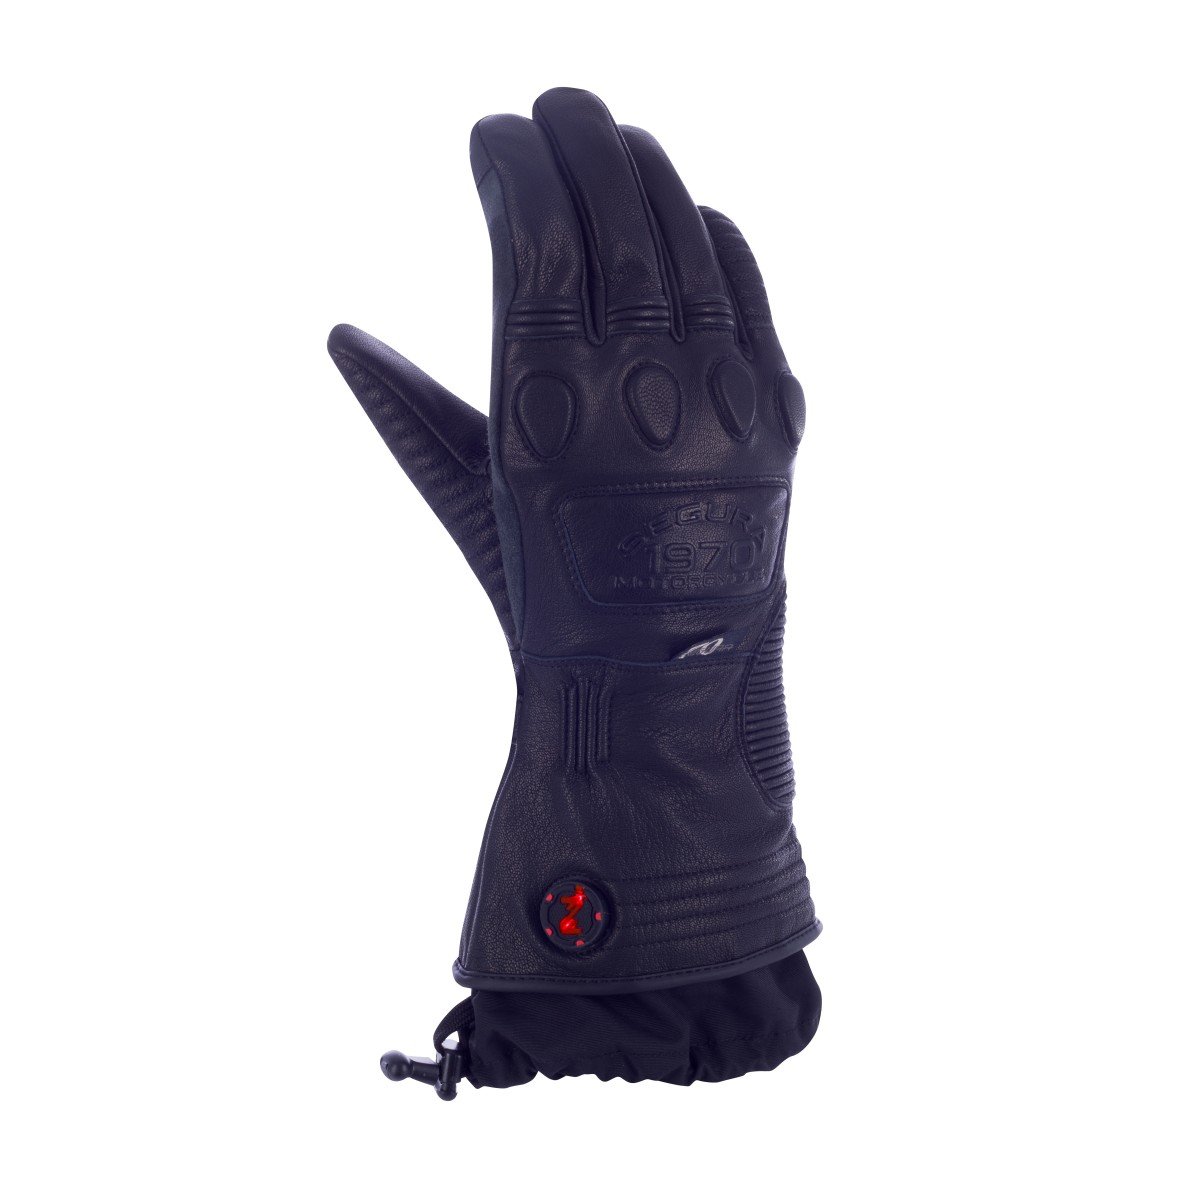 Image of Segura Shiro Black Heated Gloves Size T12 EN